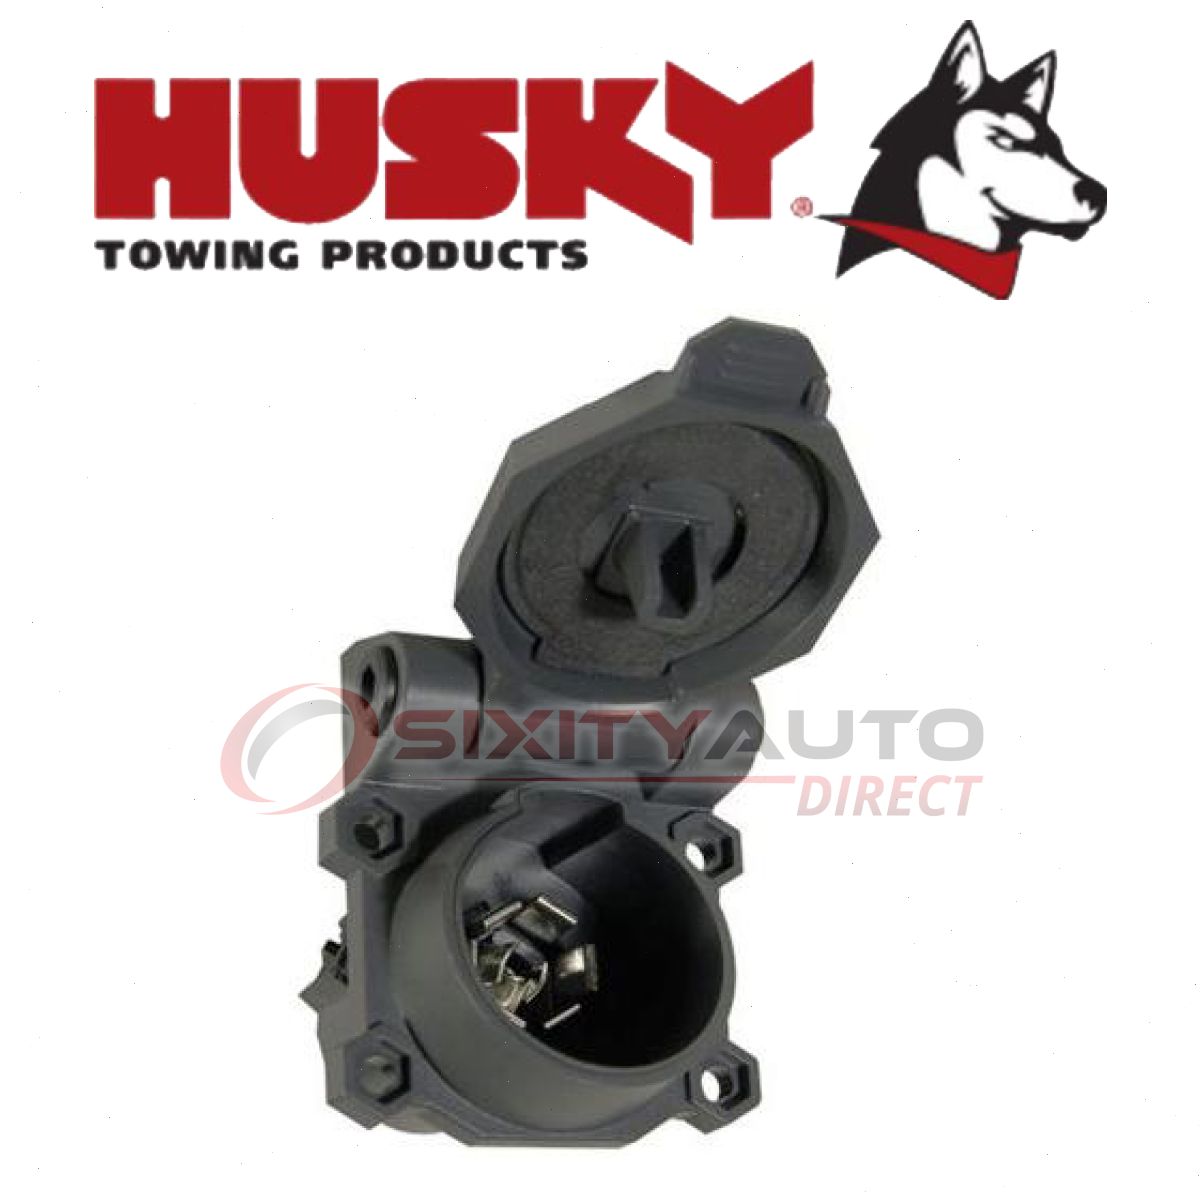 Husky Trailer Wiring Harness for 2003-2013 GMC Sierra 1500 - Electrical 2003 Gmc Sierra Trailer Wiring Harness